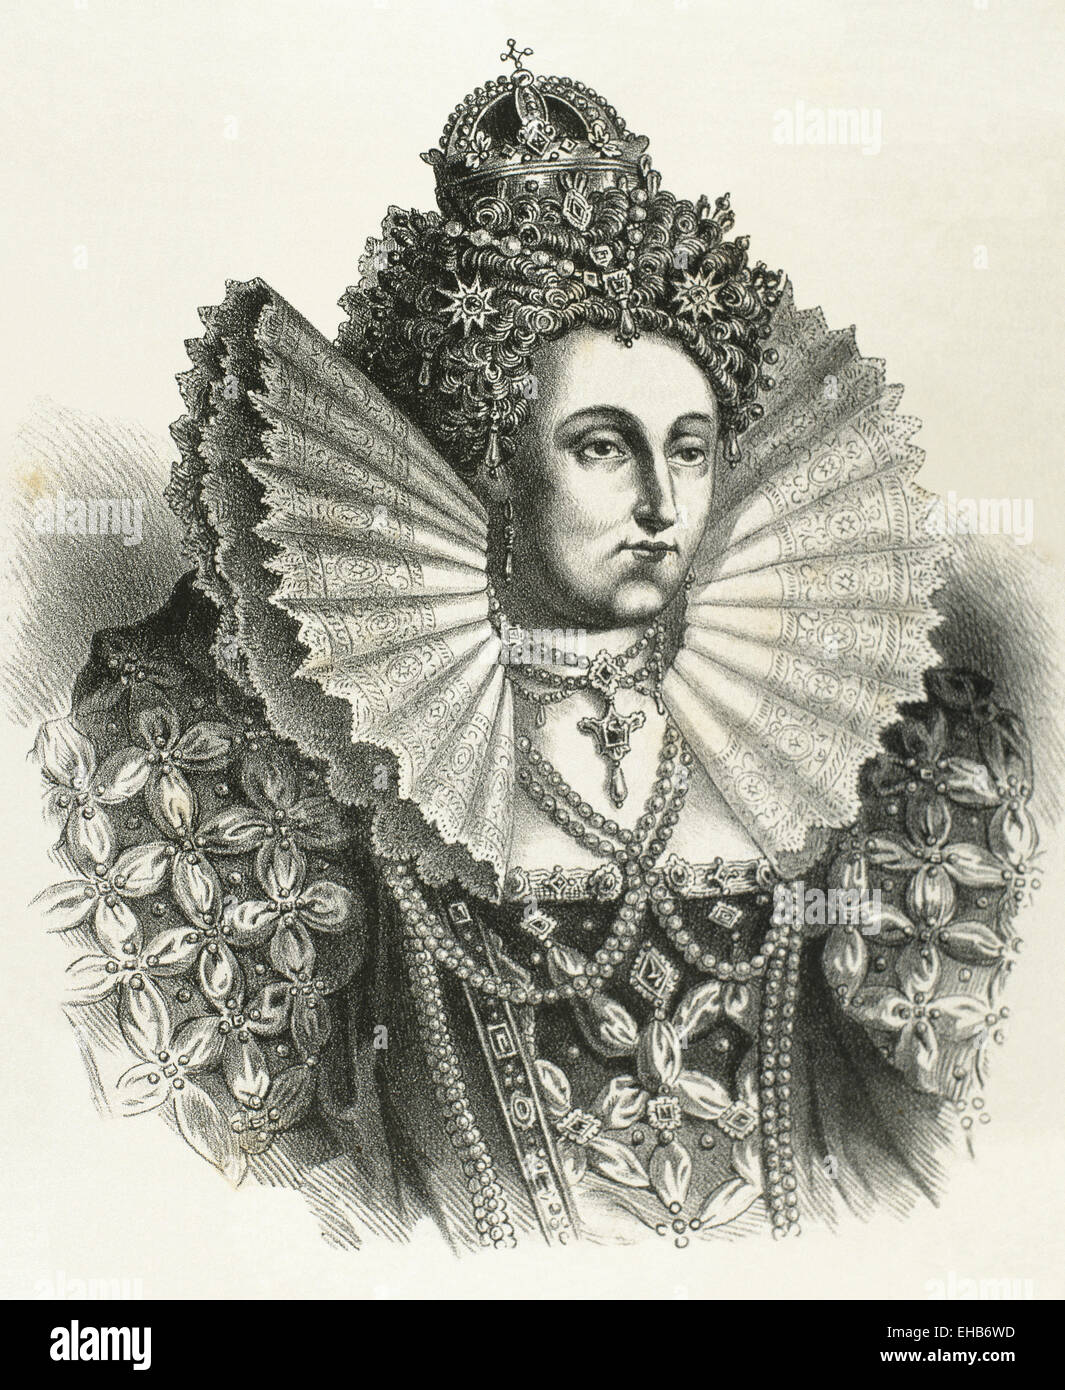 Elisabetta I d'Inghilterra (1533-1603). Regina di Inghilterra e Irlanda. La Vergine Regina. Ritratto. Incisione. Xix secolo. Foto Stock